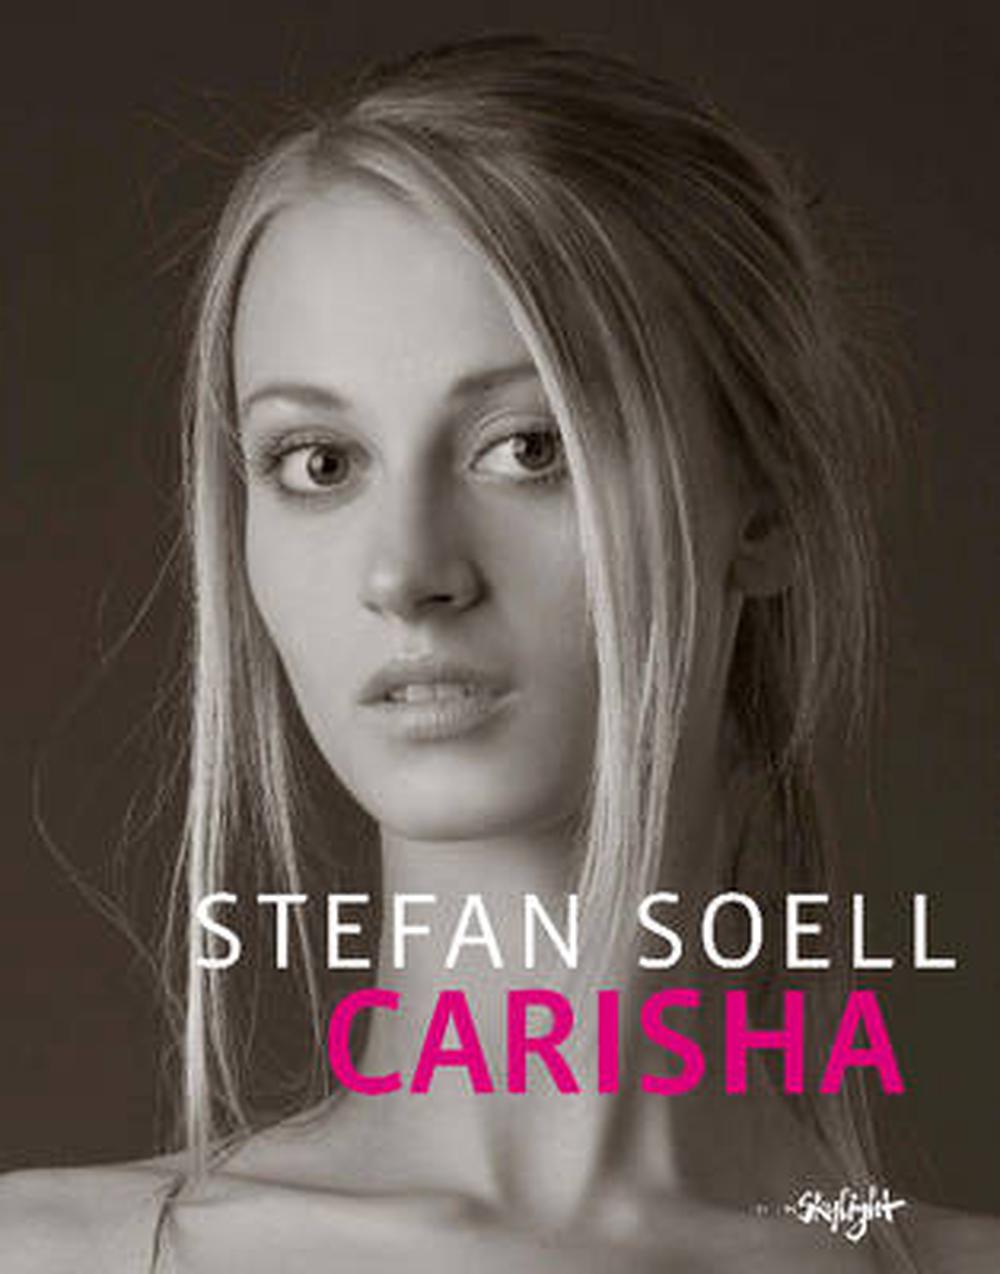 Carisha By Stefan Soell English Hardcover Book Free Shipping 9783037666364 Ebay